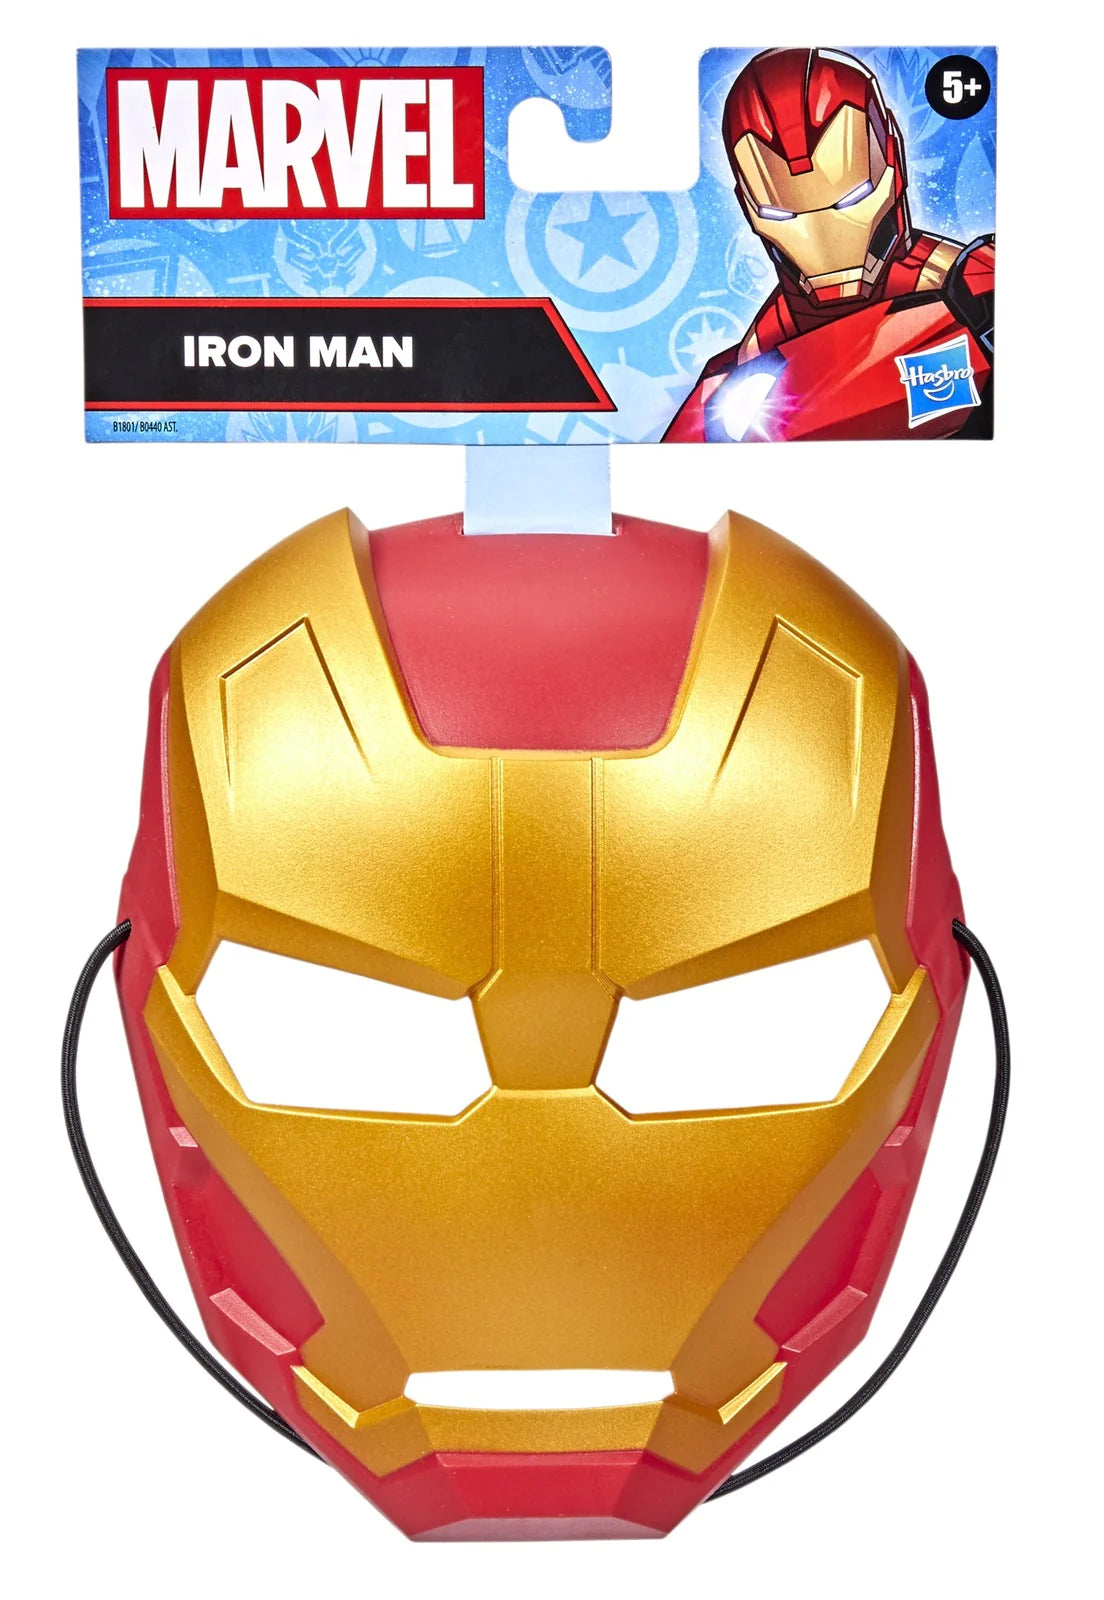 MARVEL SUPER HERO MASK - IRON MAN